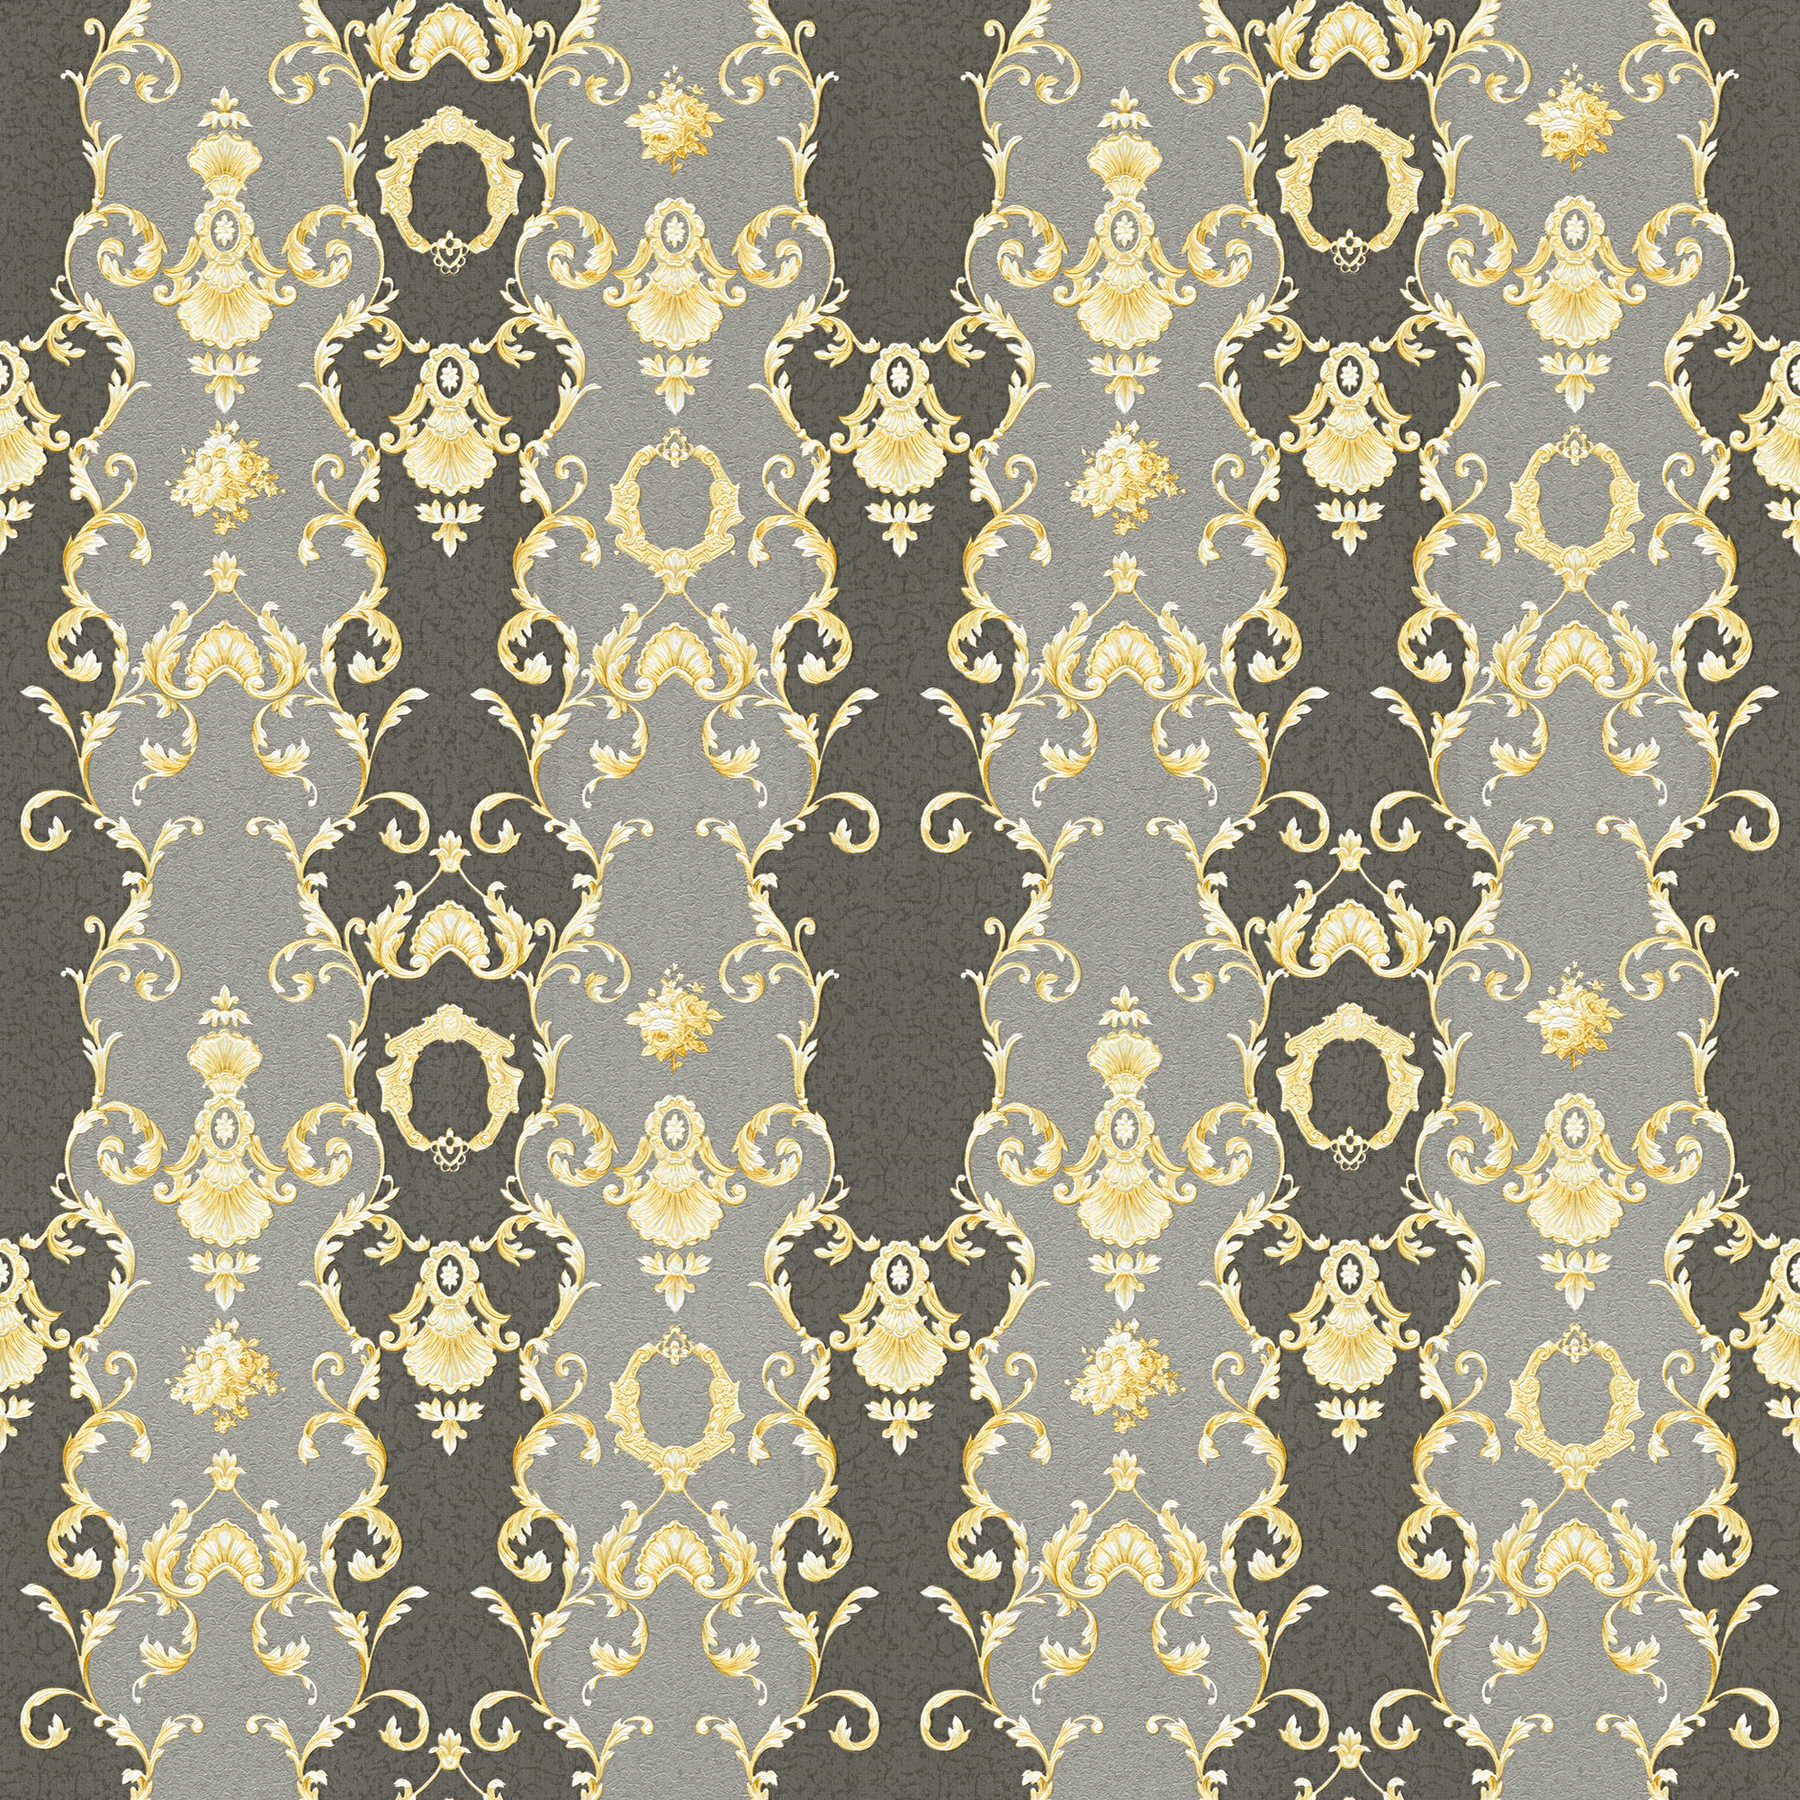 Ornament wallpaper black & gold with stripes design
